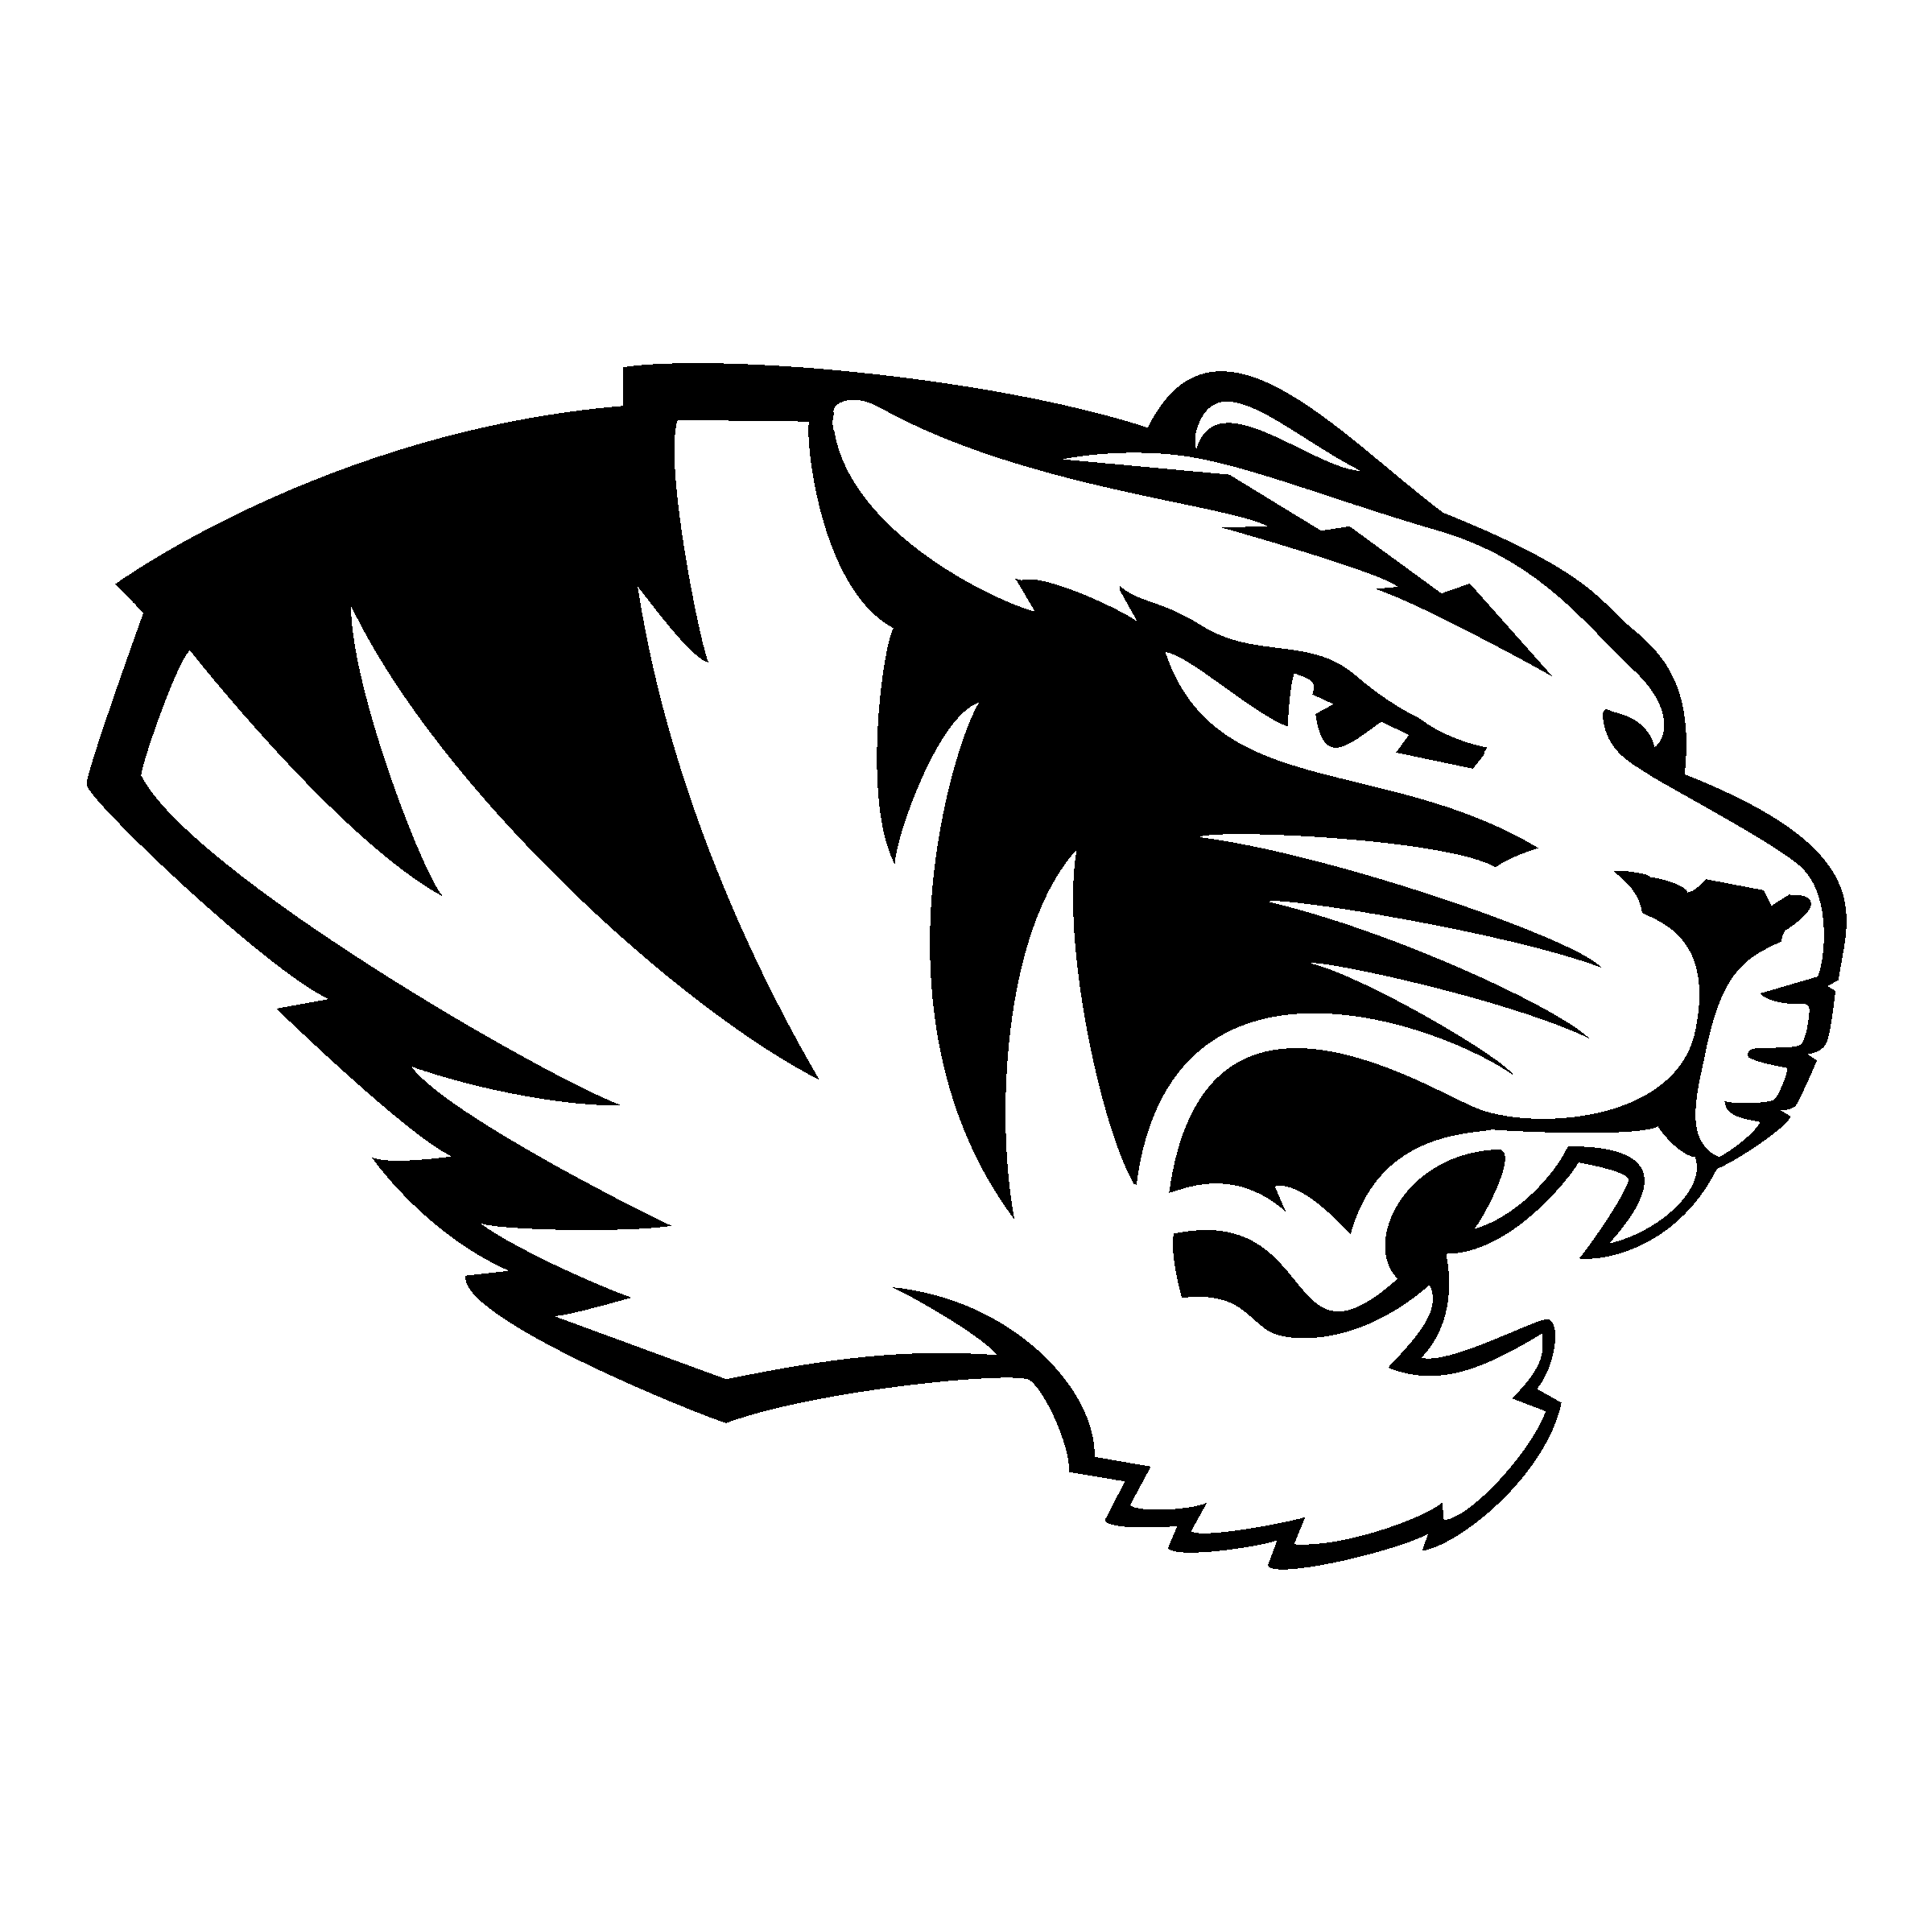 Missouri Tigers Logo - Missouri Tigers Logo PNG Transparent & SVG Vector - Freebie Supply